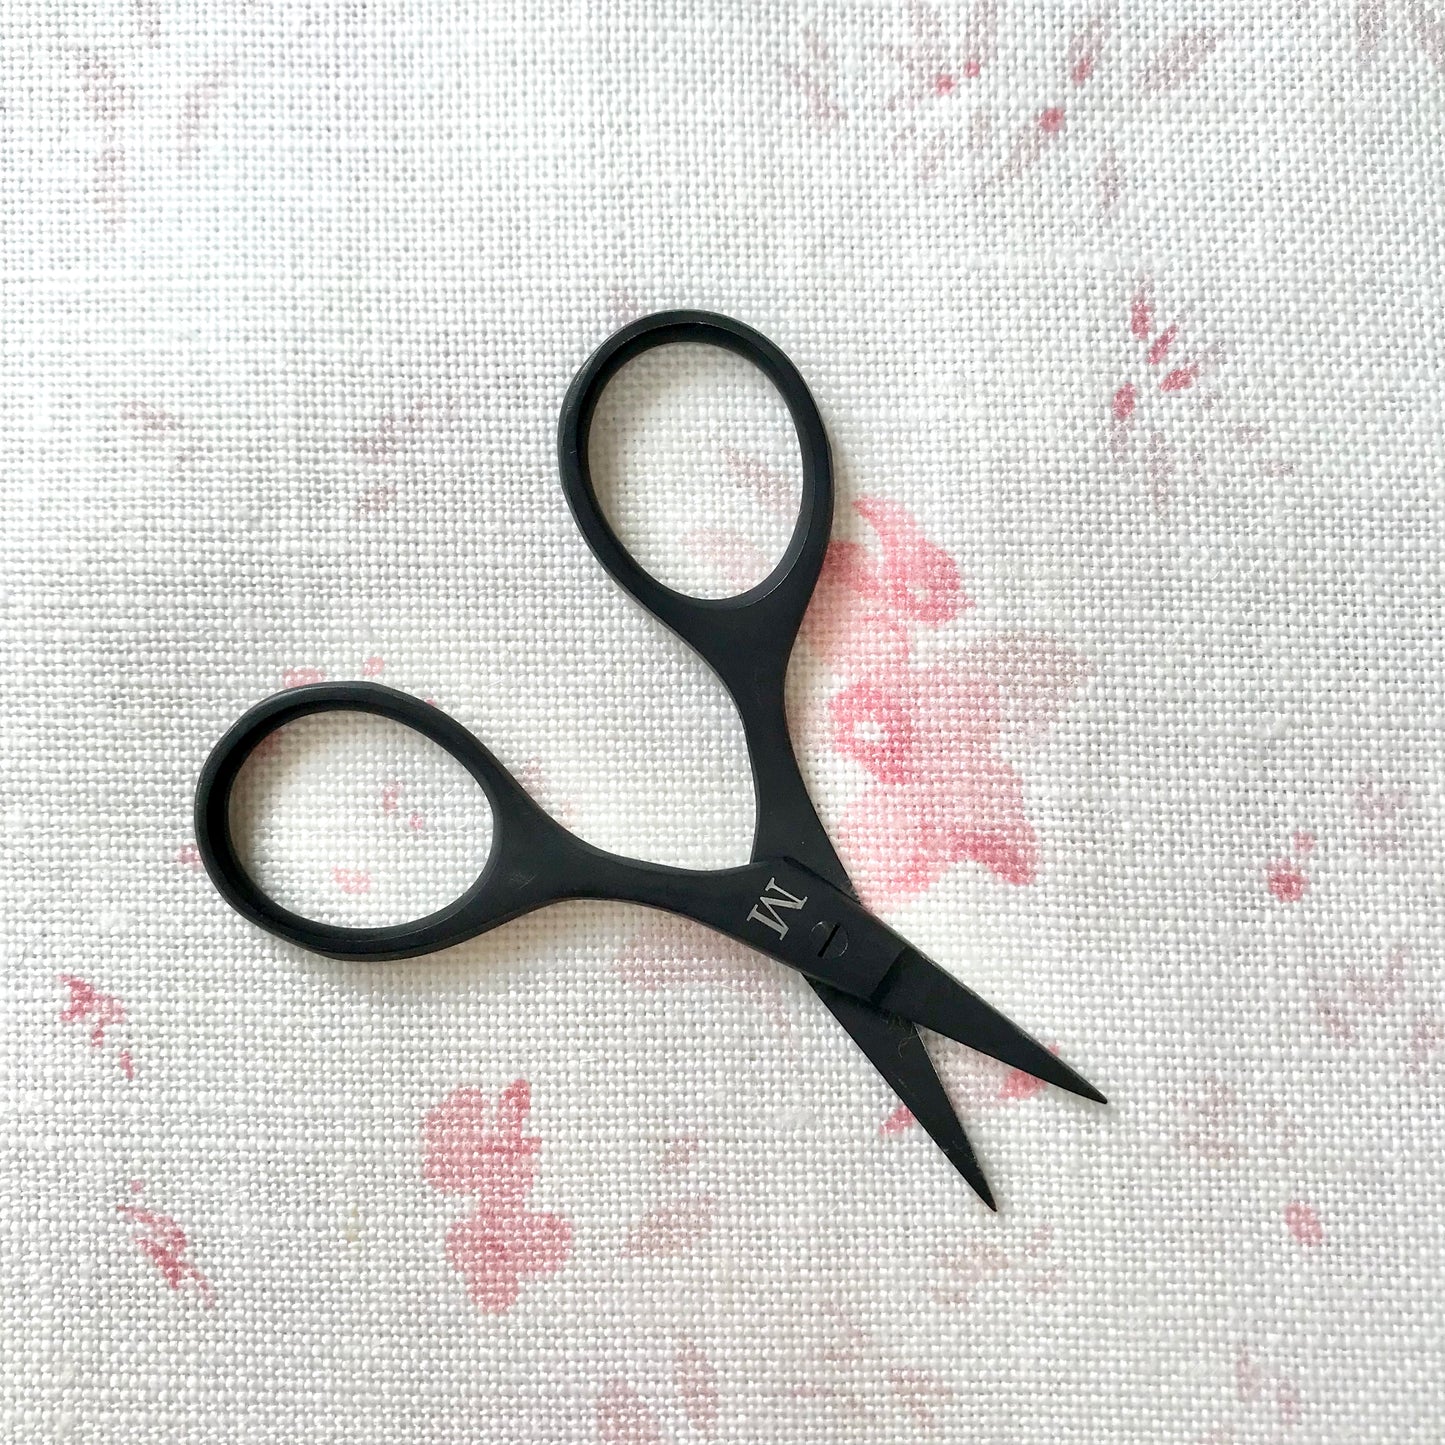 Merchant & Mills - Baby Bow Scissors